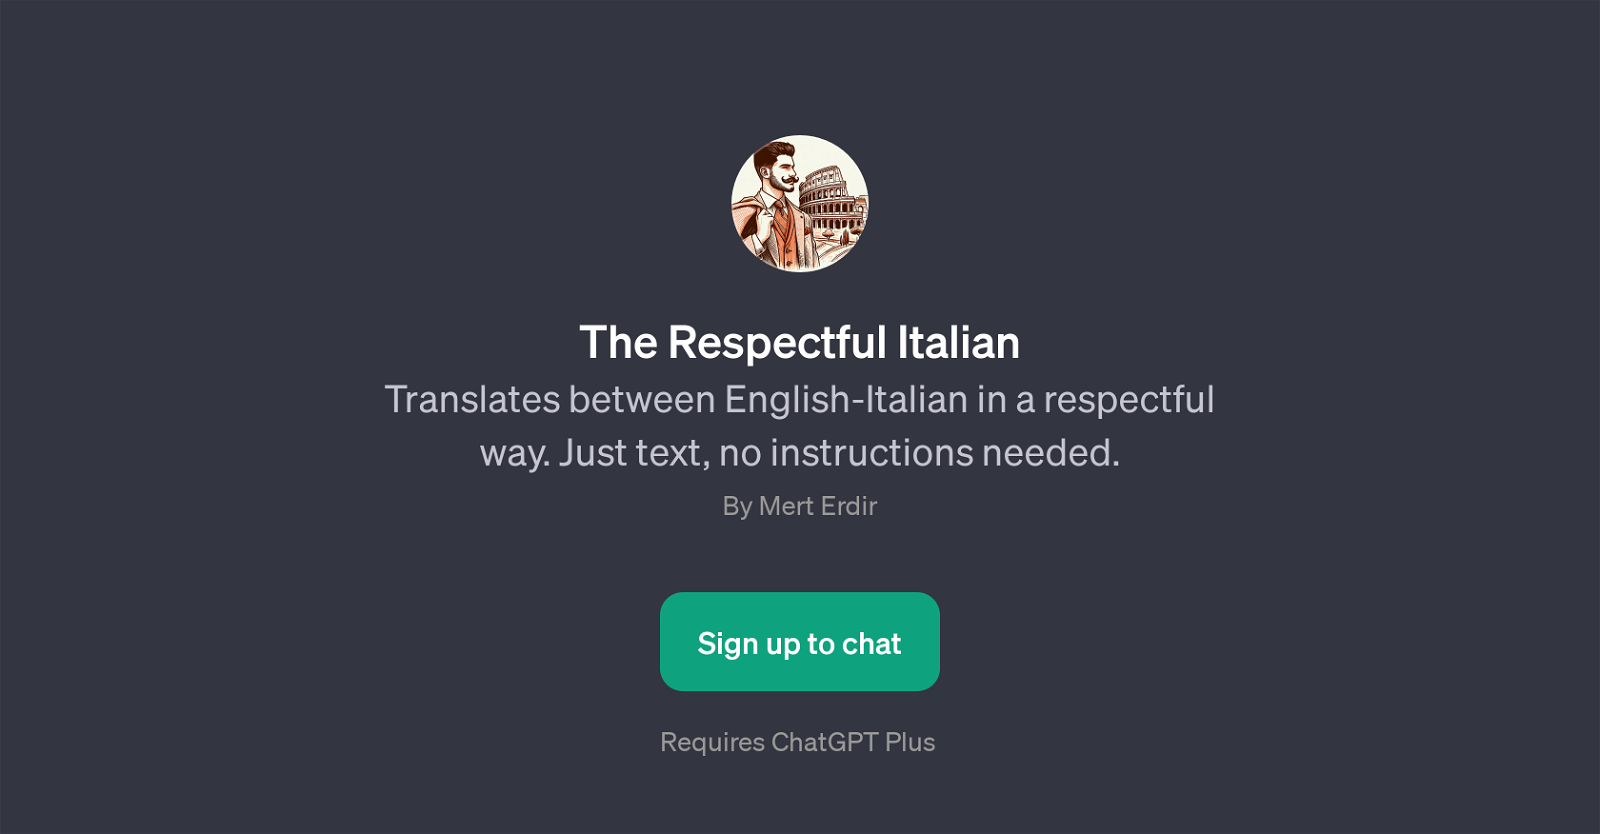 The Respectful Italian website